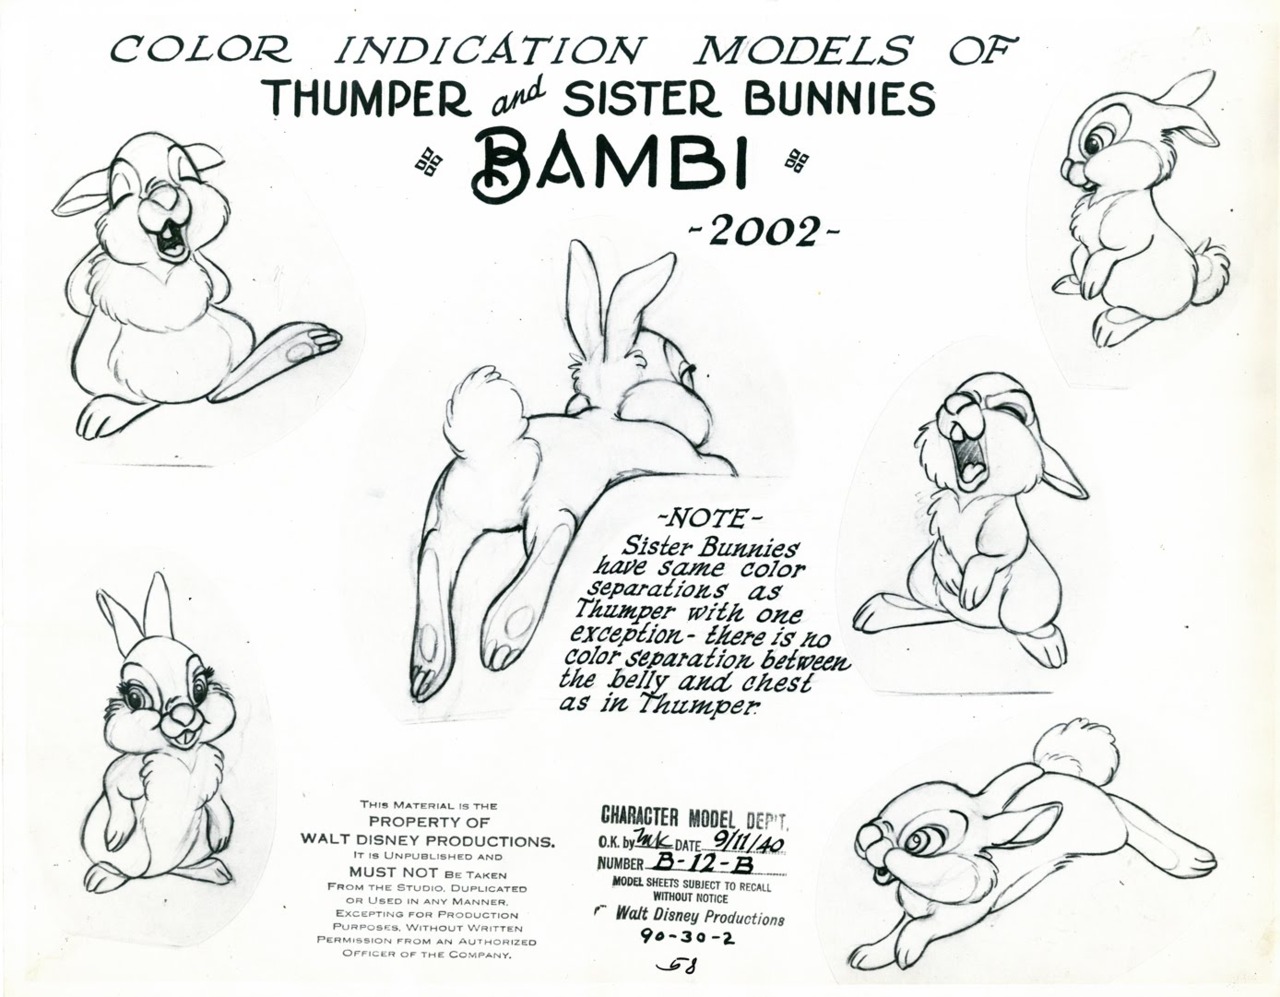 Bambi Quotes Thumper Rabbit.